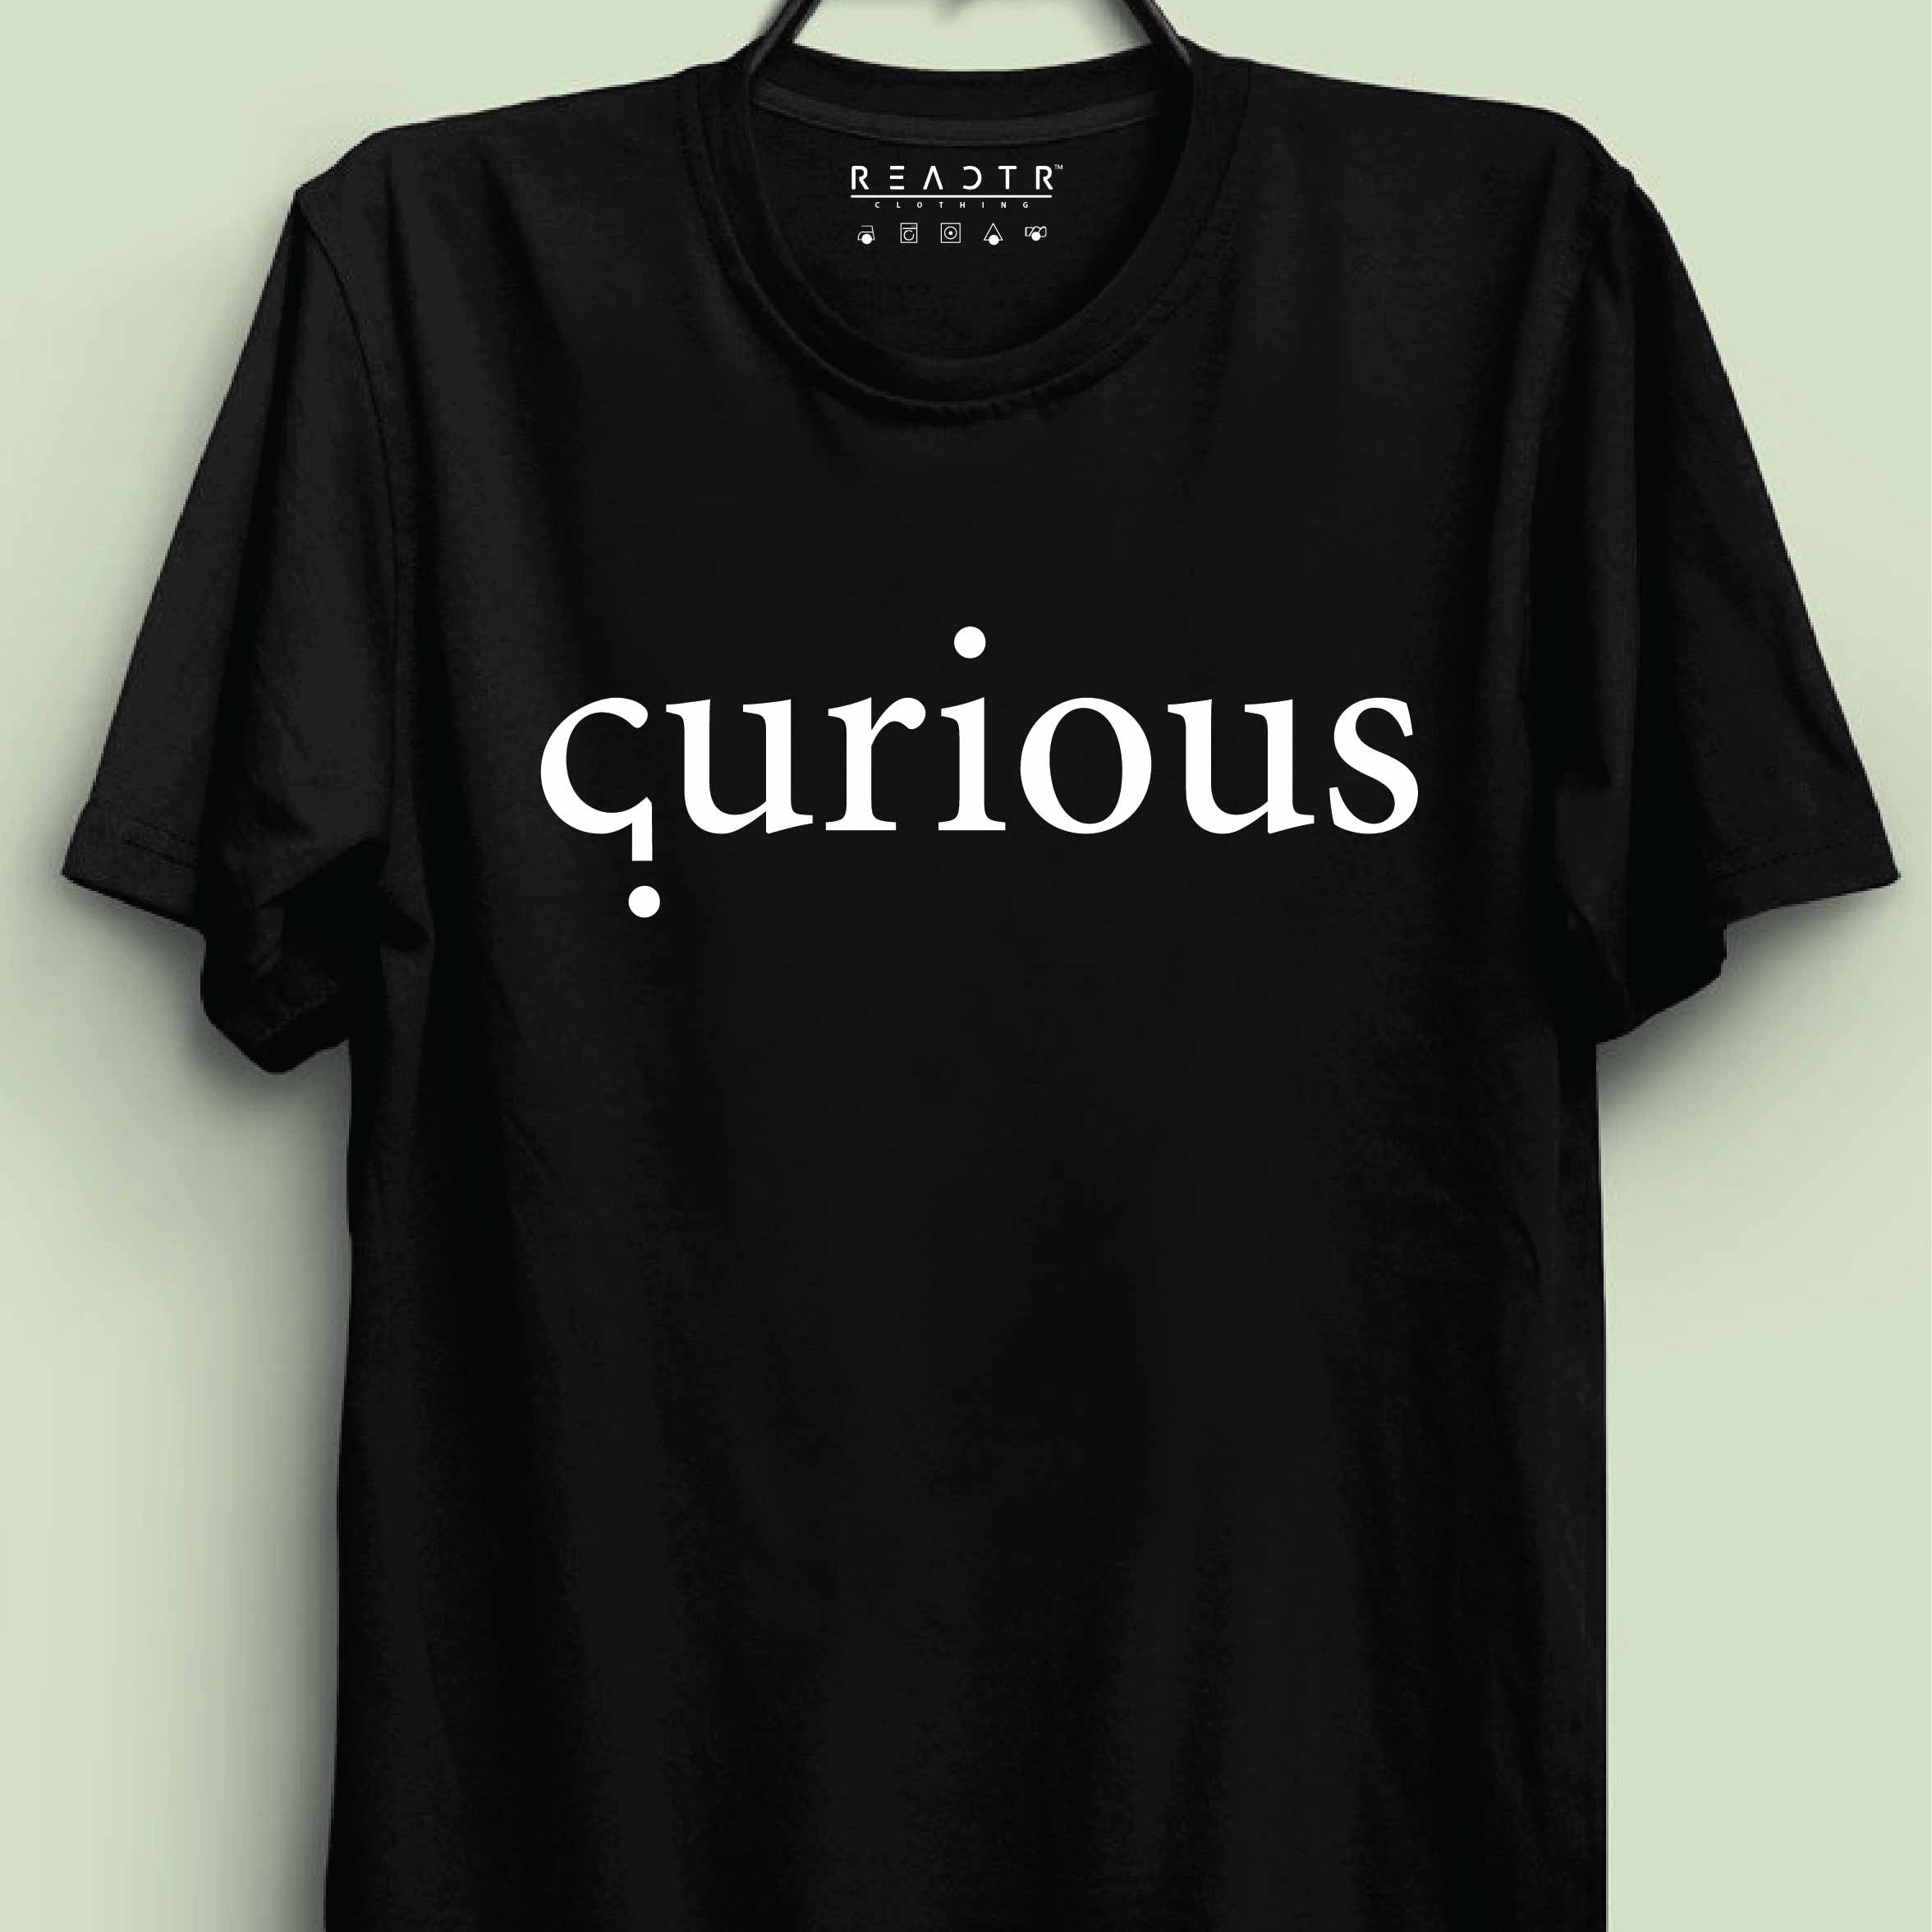 Curious Reactr Tshirts For Men - Eyewearlabs